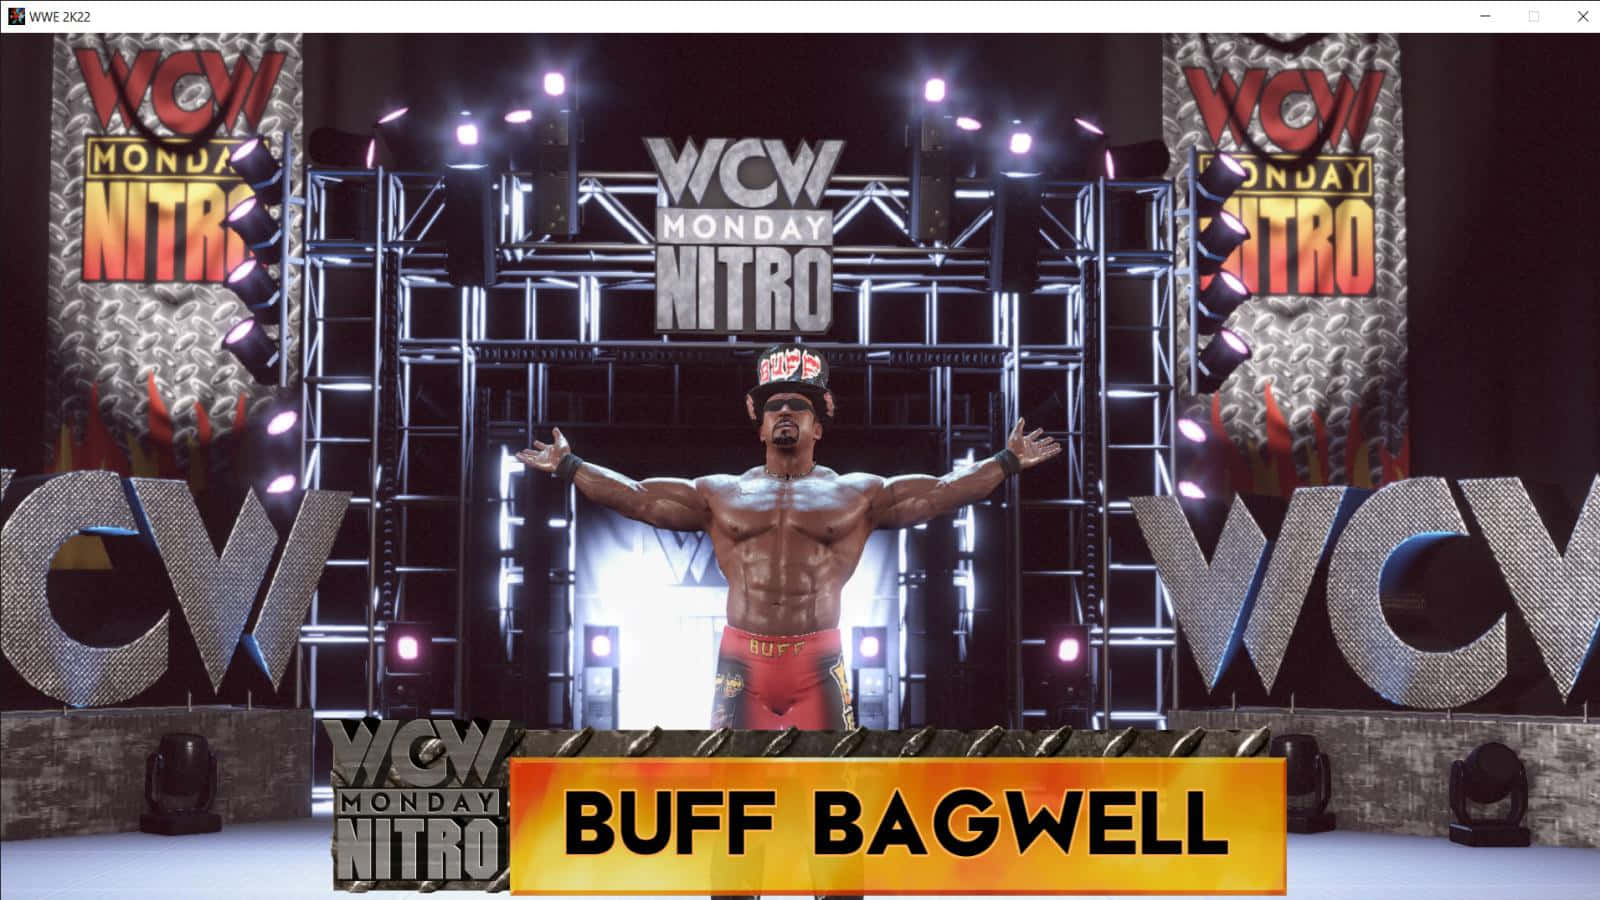 Buffbagwell Wcw Monday Nitro Wrestler Fotografi Wallpaper